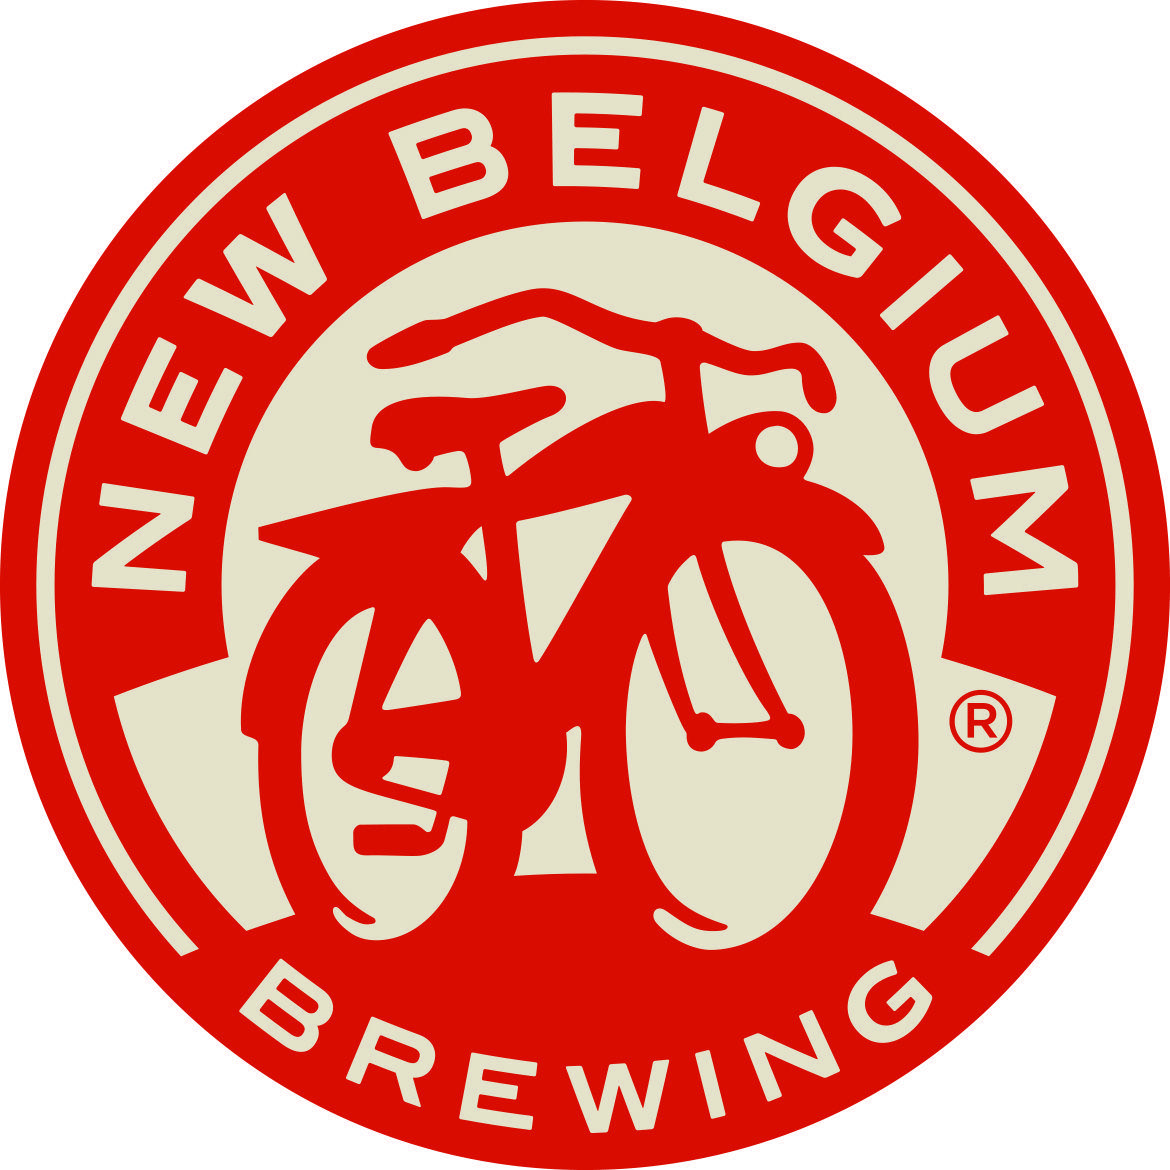 Nbb Logo - NBB Bike Text logo 4-color - Keystone Festivals